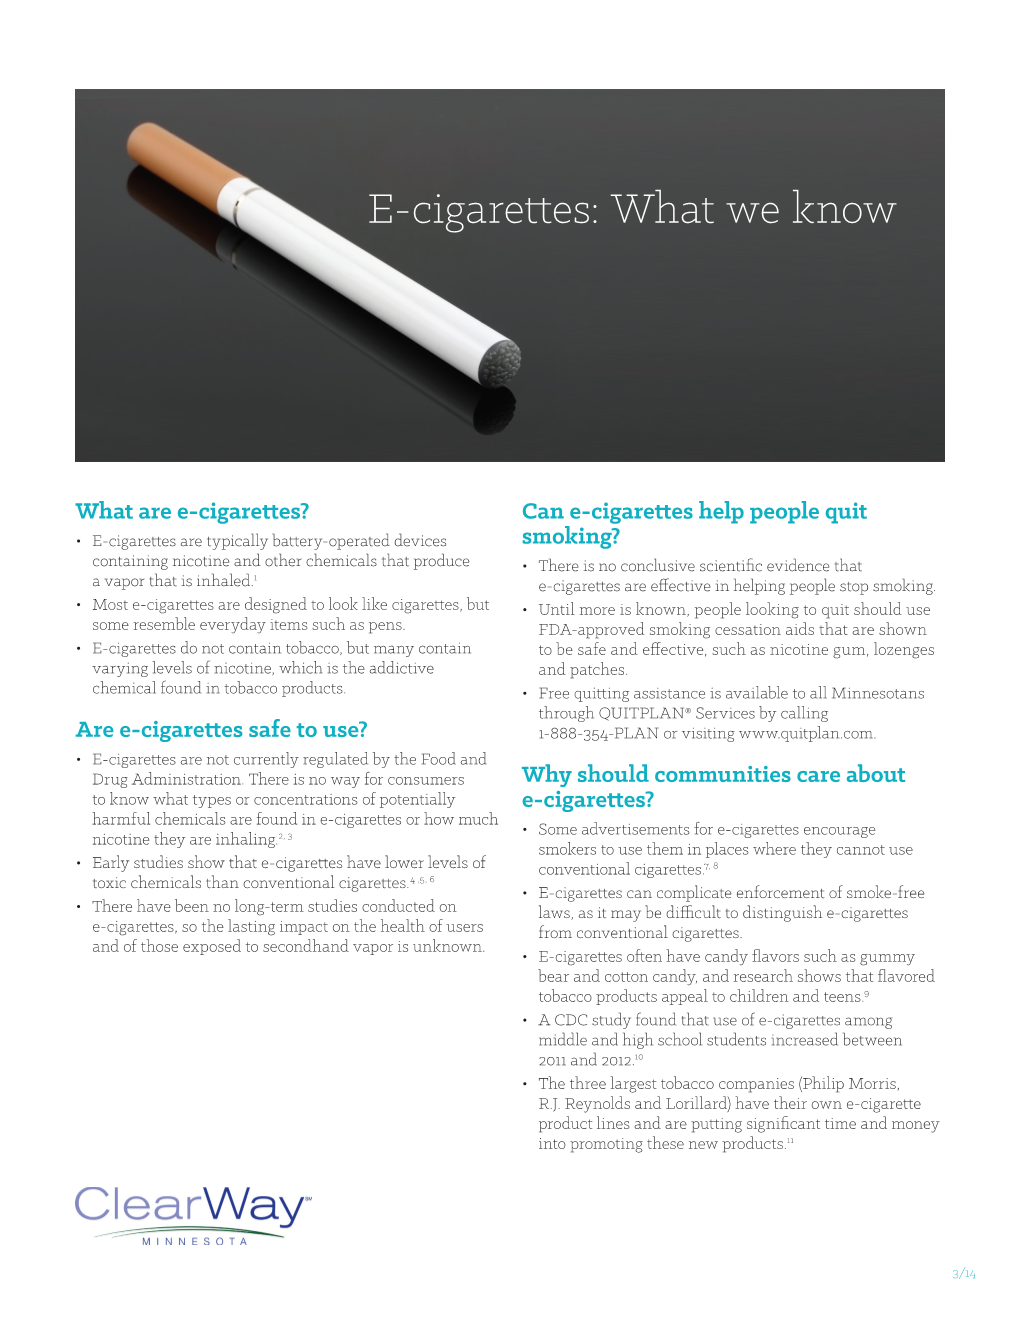 E-Cigarettes: What We Know